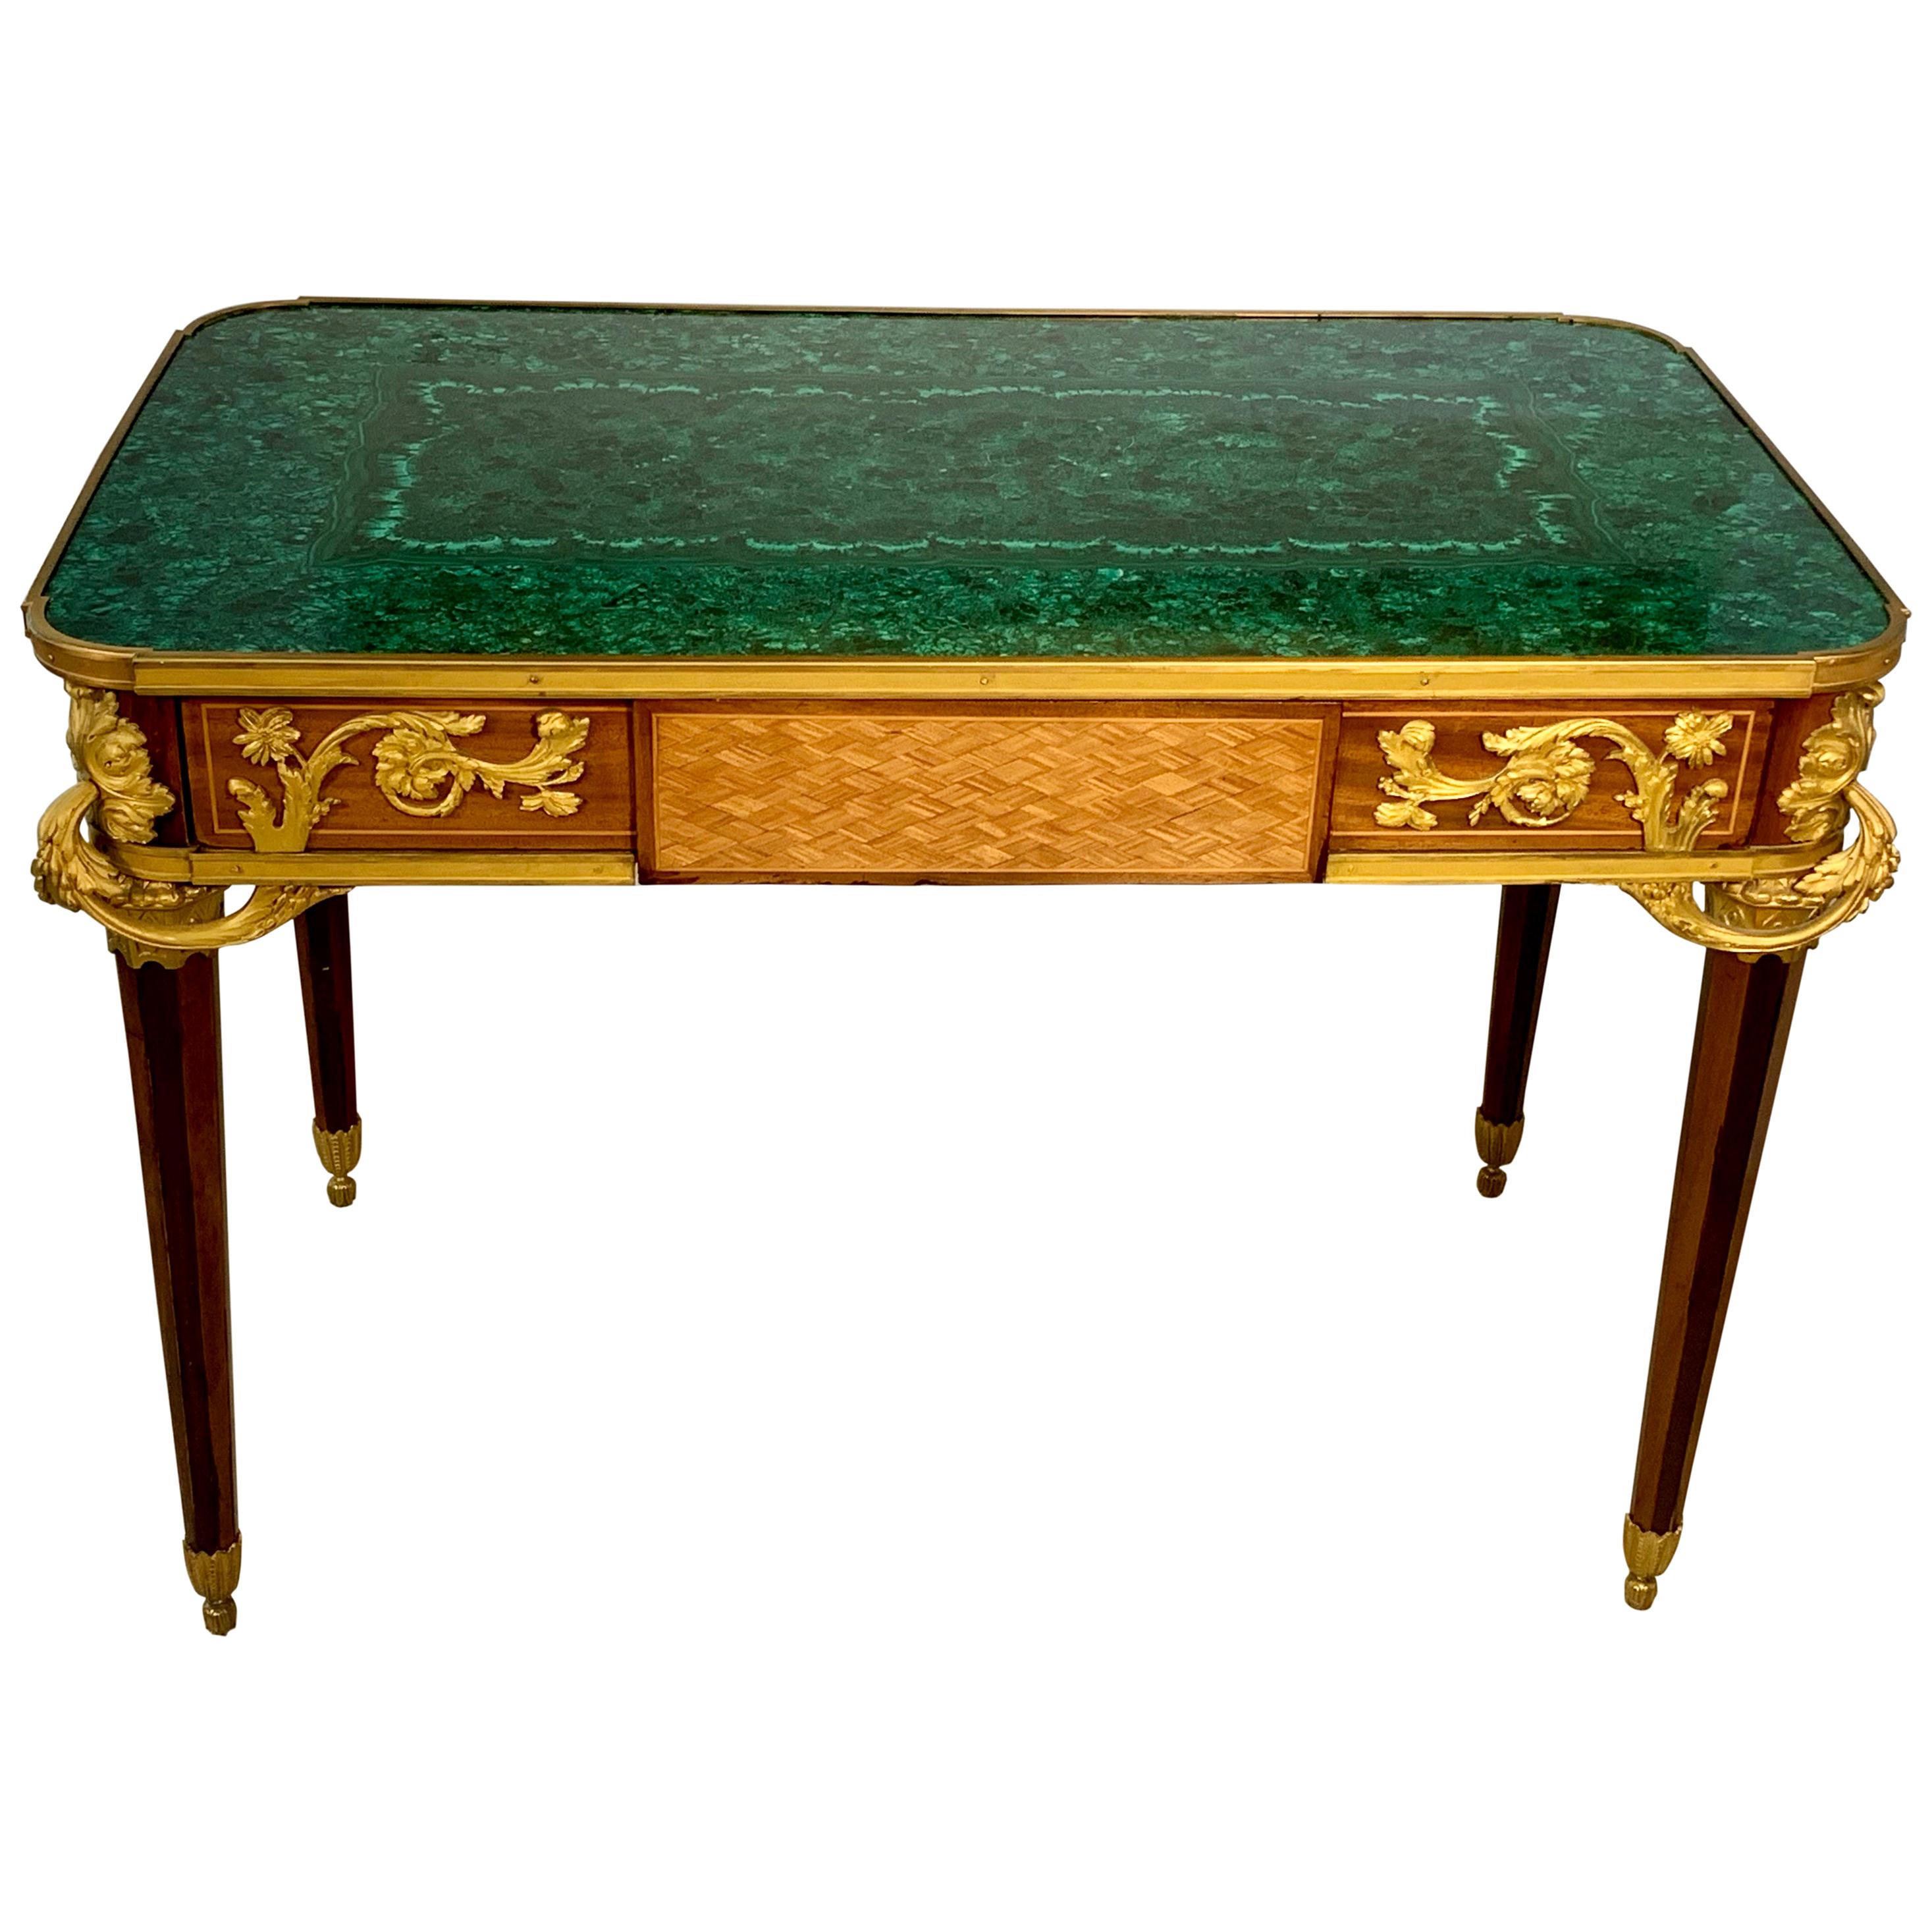 Antique French Ormolu Mounted Malachite Top Center Table / desk